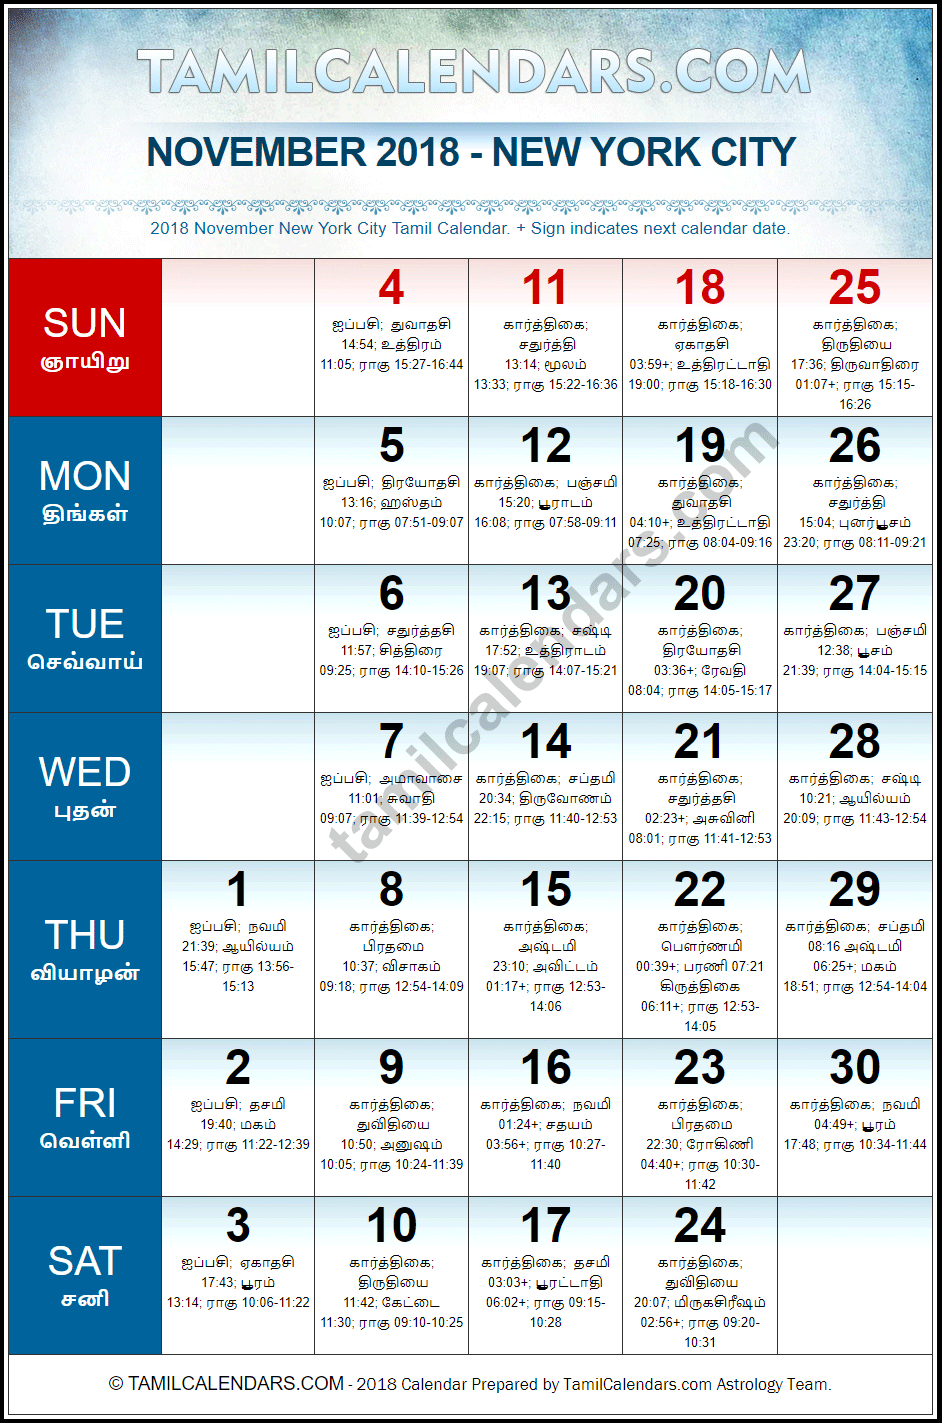 November 2018 Tamil Calendar for New York, USA